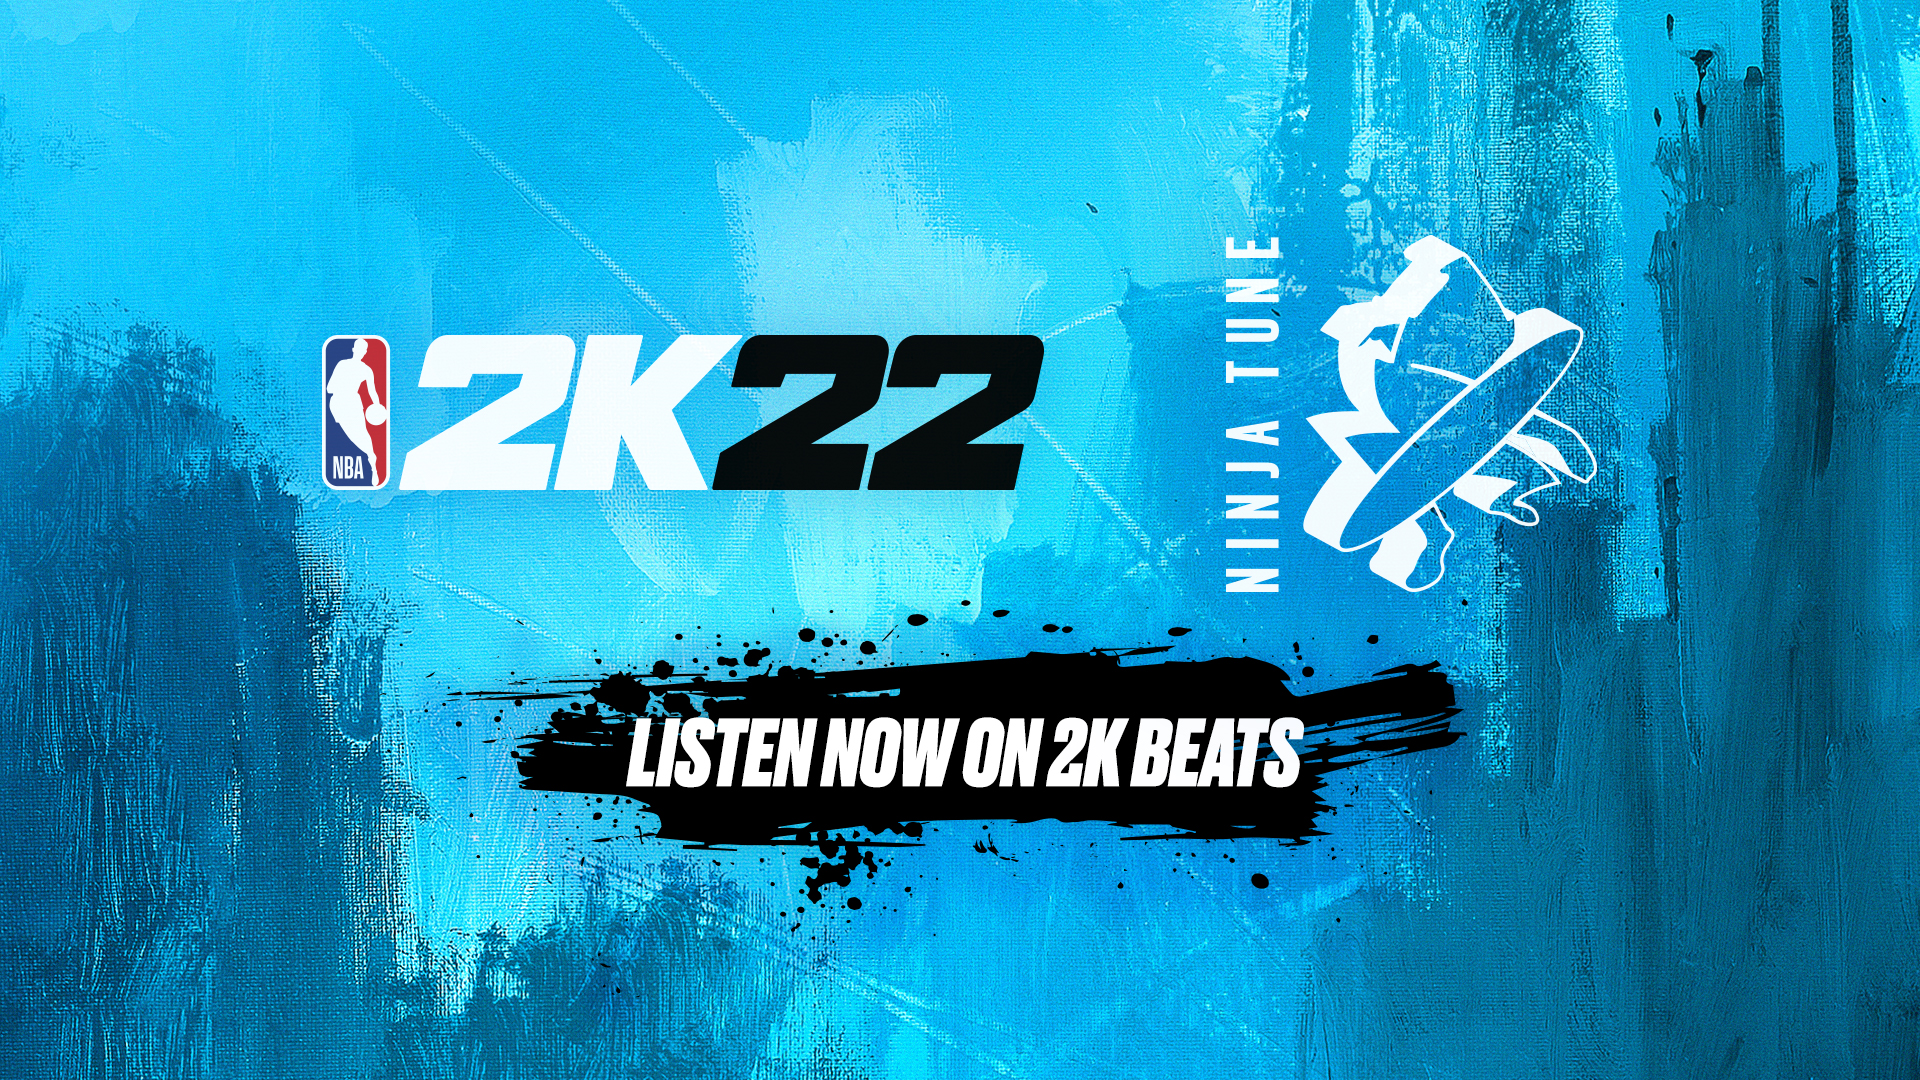 NBA 2K22 Season 5 2K Beats Ninja Tune